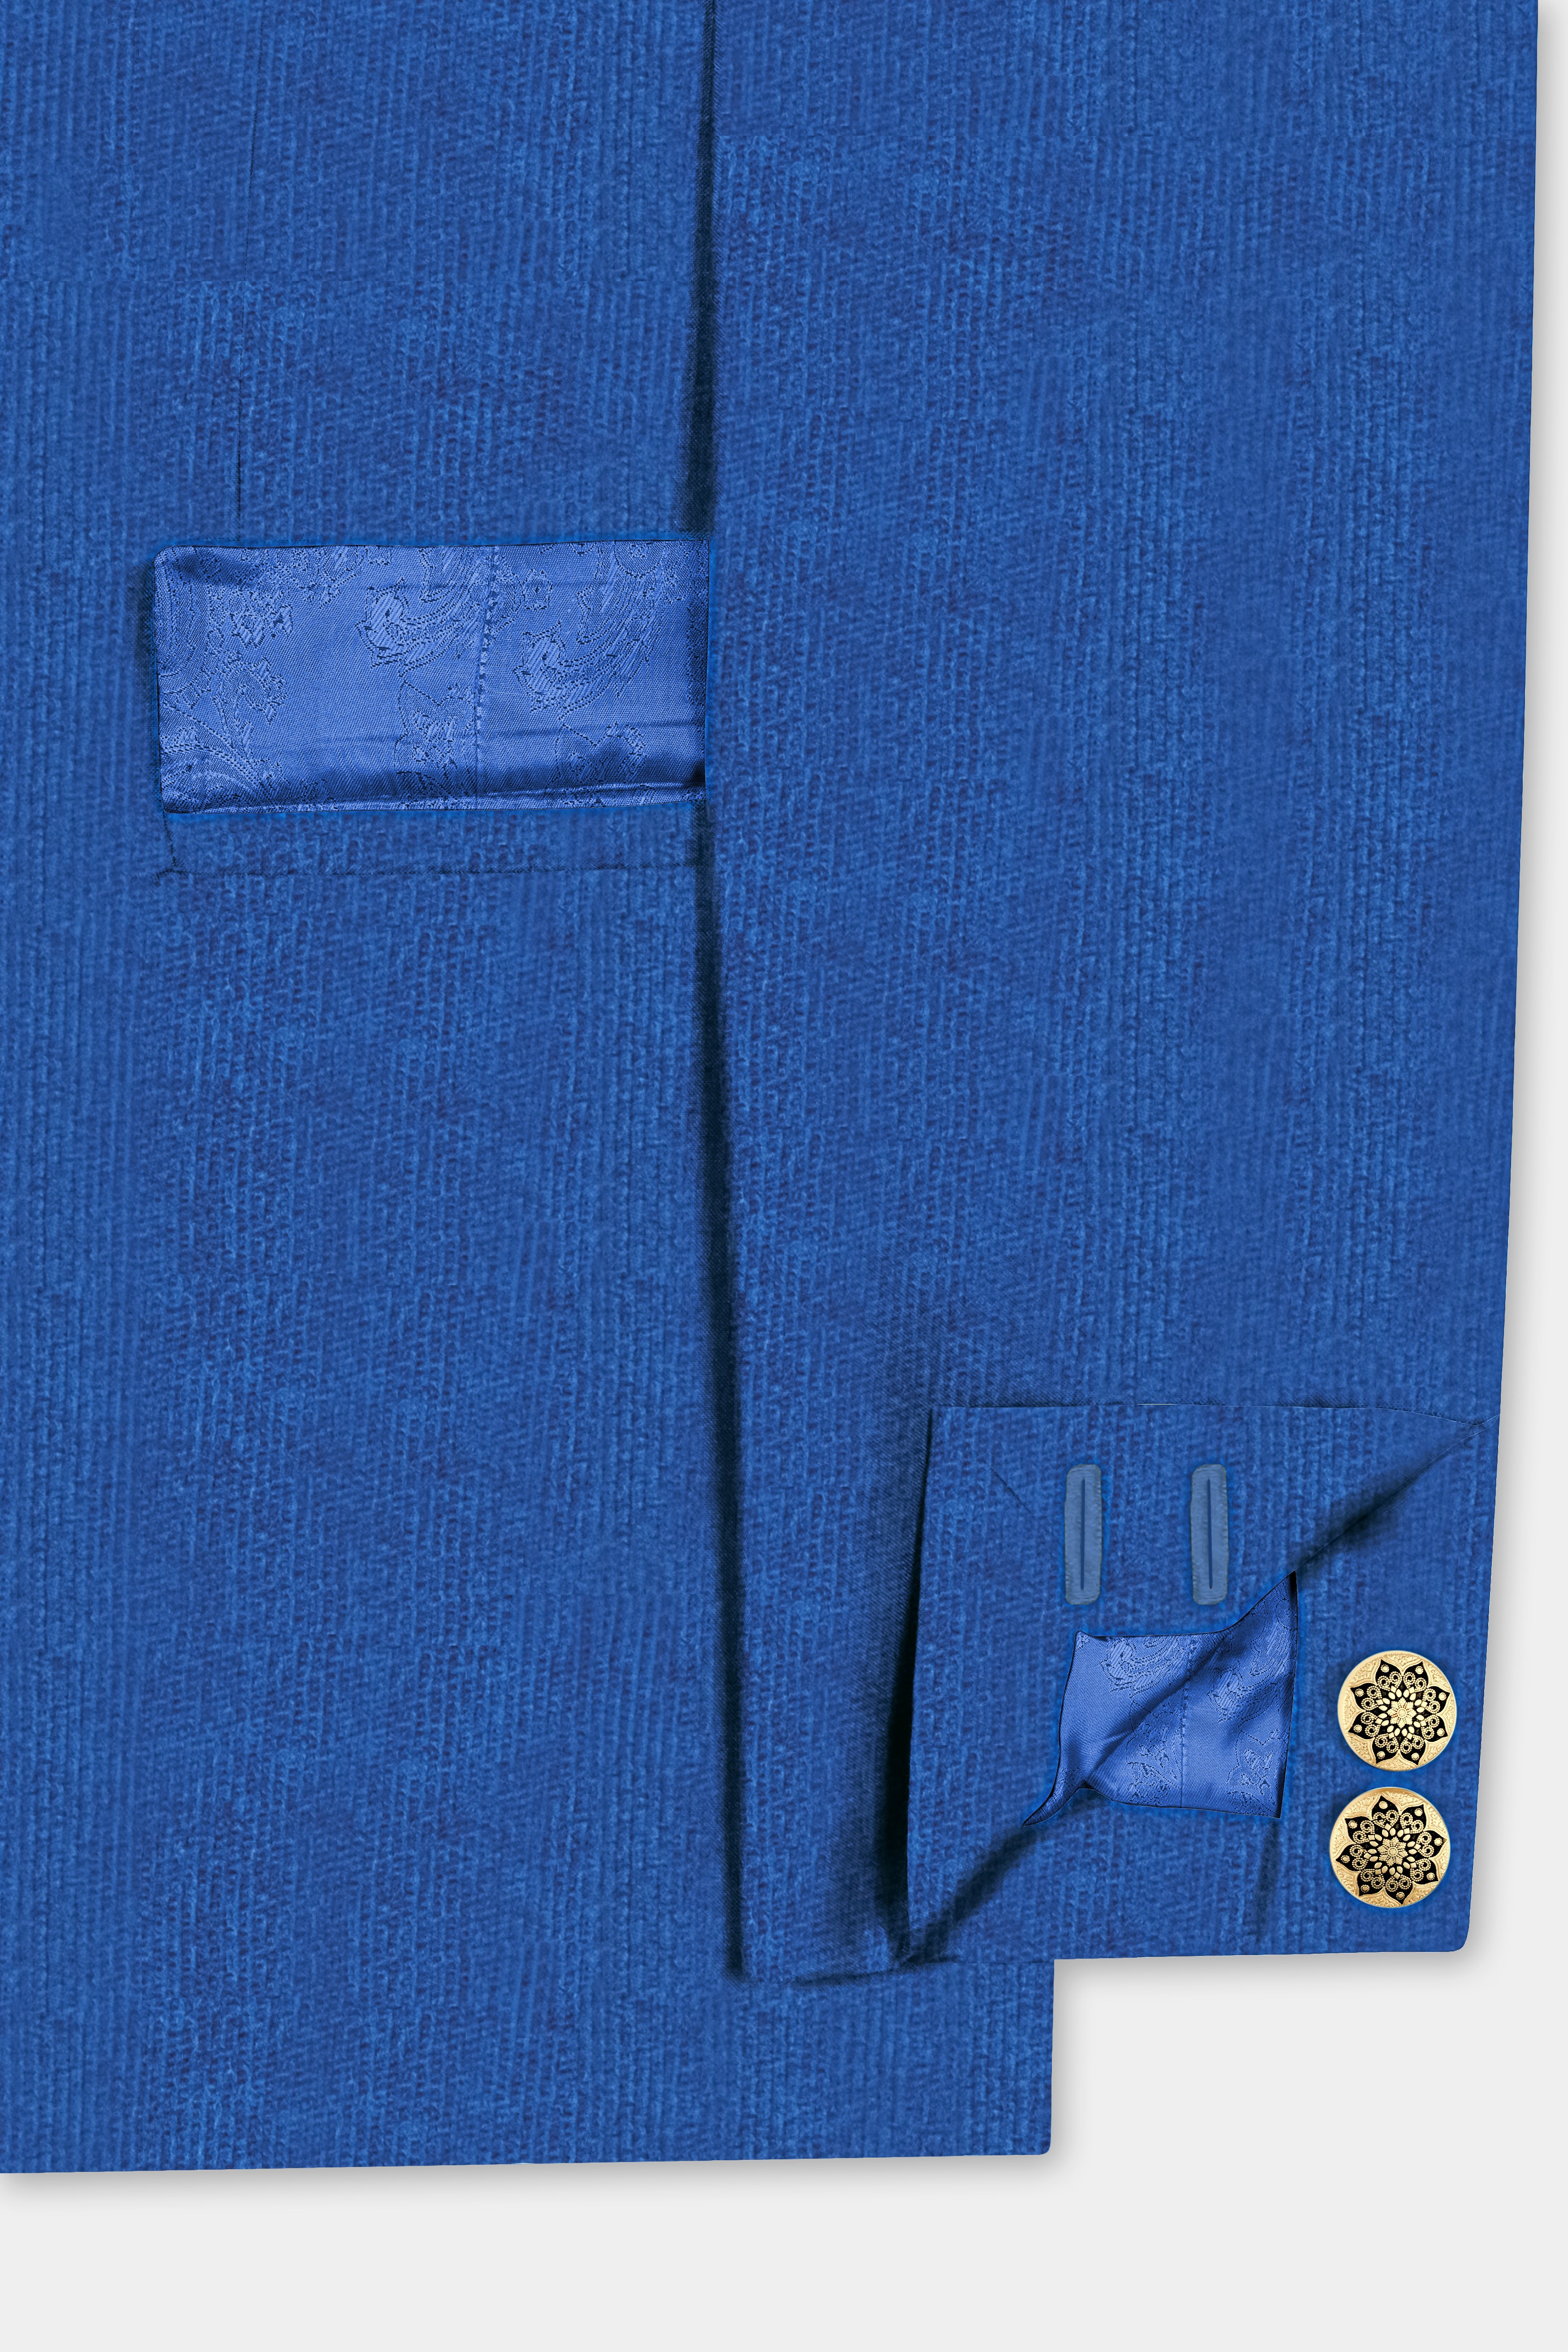 Cobalt Blue Cross Placket Bandhgala Corduroy Premium Cotton Designer Blazer